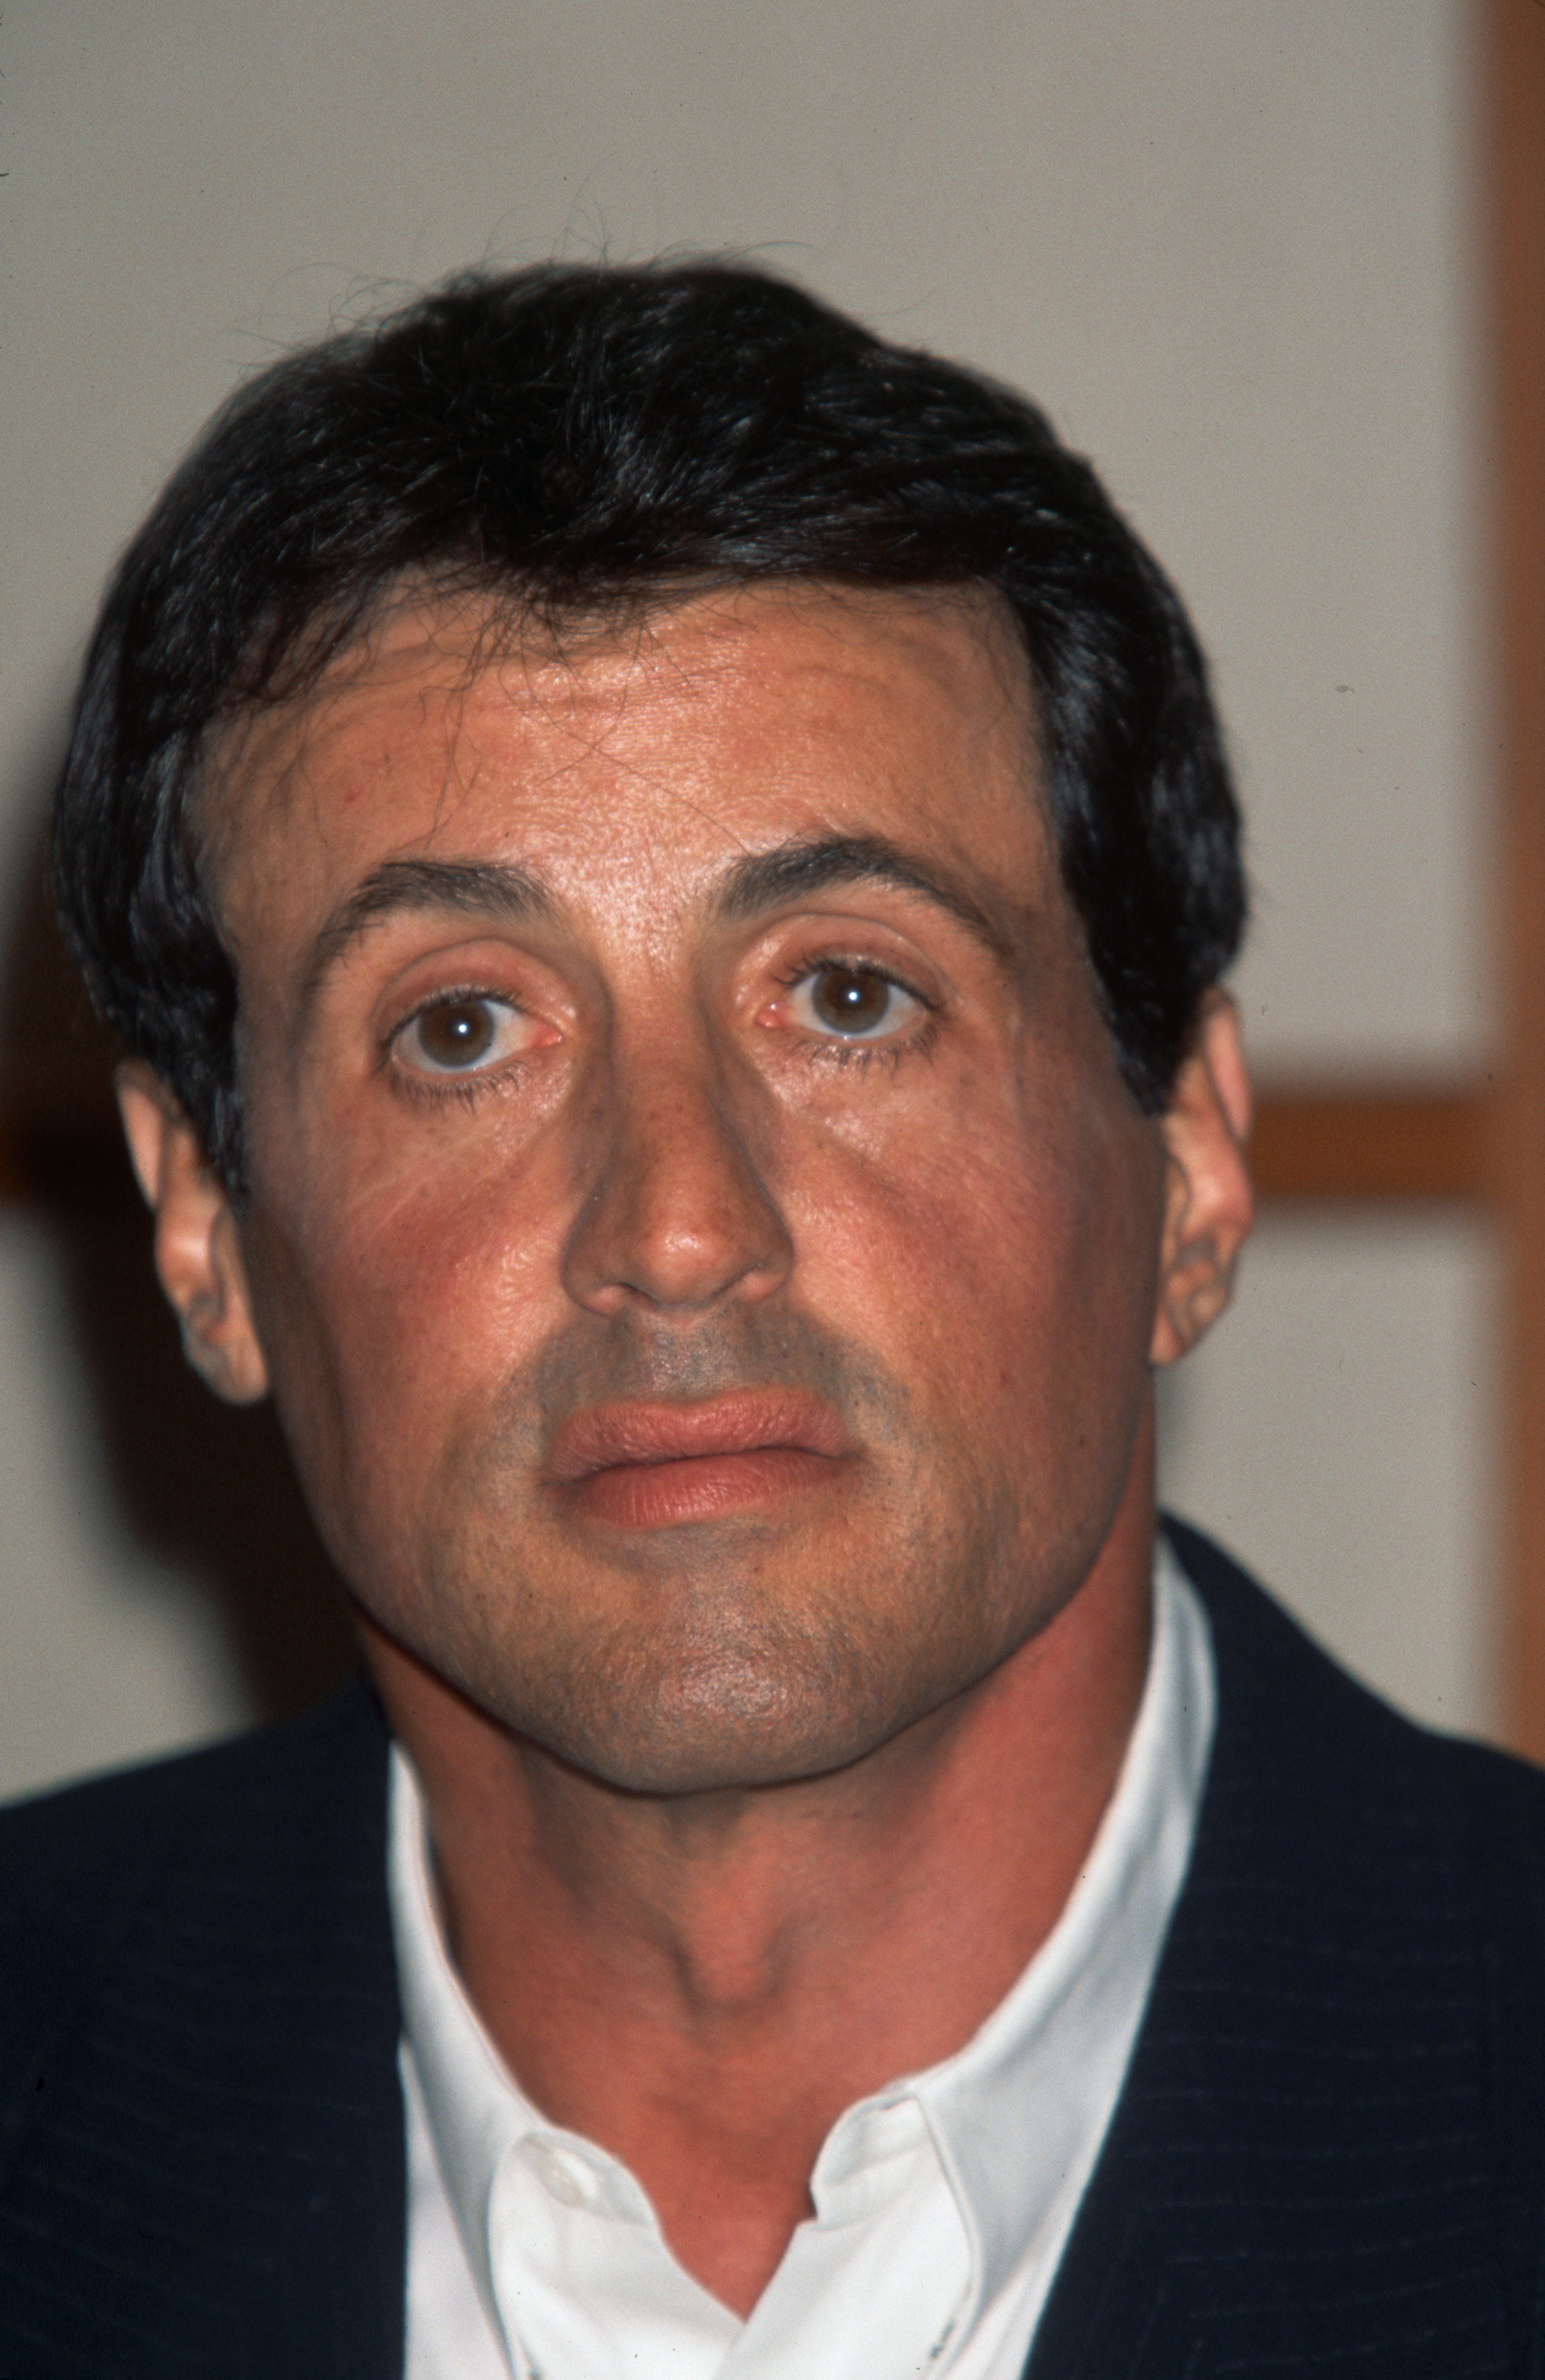 Portrait de Sylvester Stallone vers 1996. | Source : Getty Images